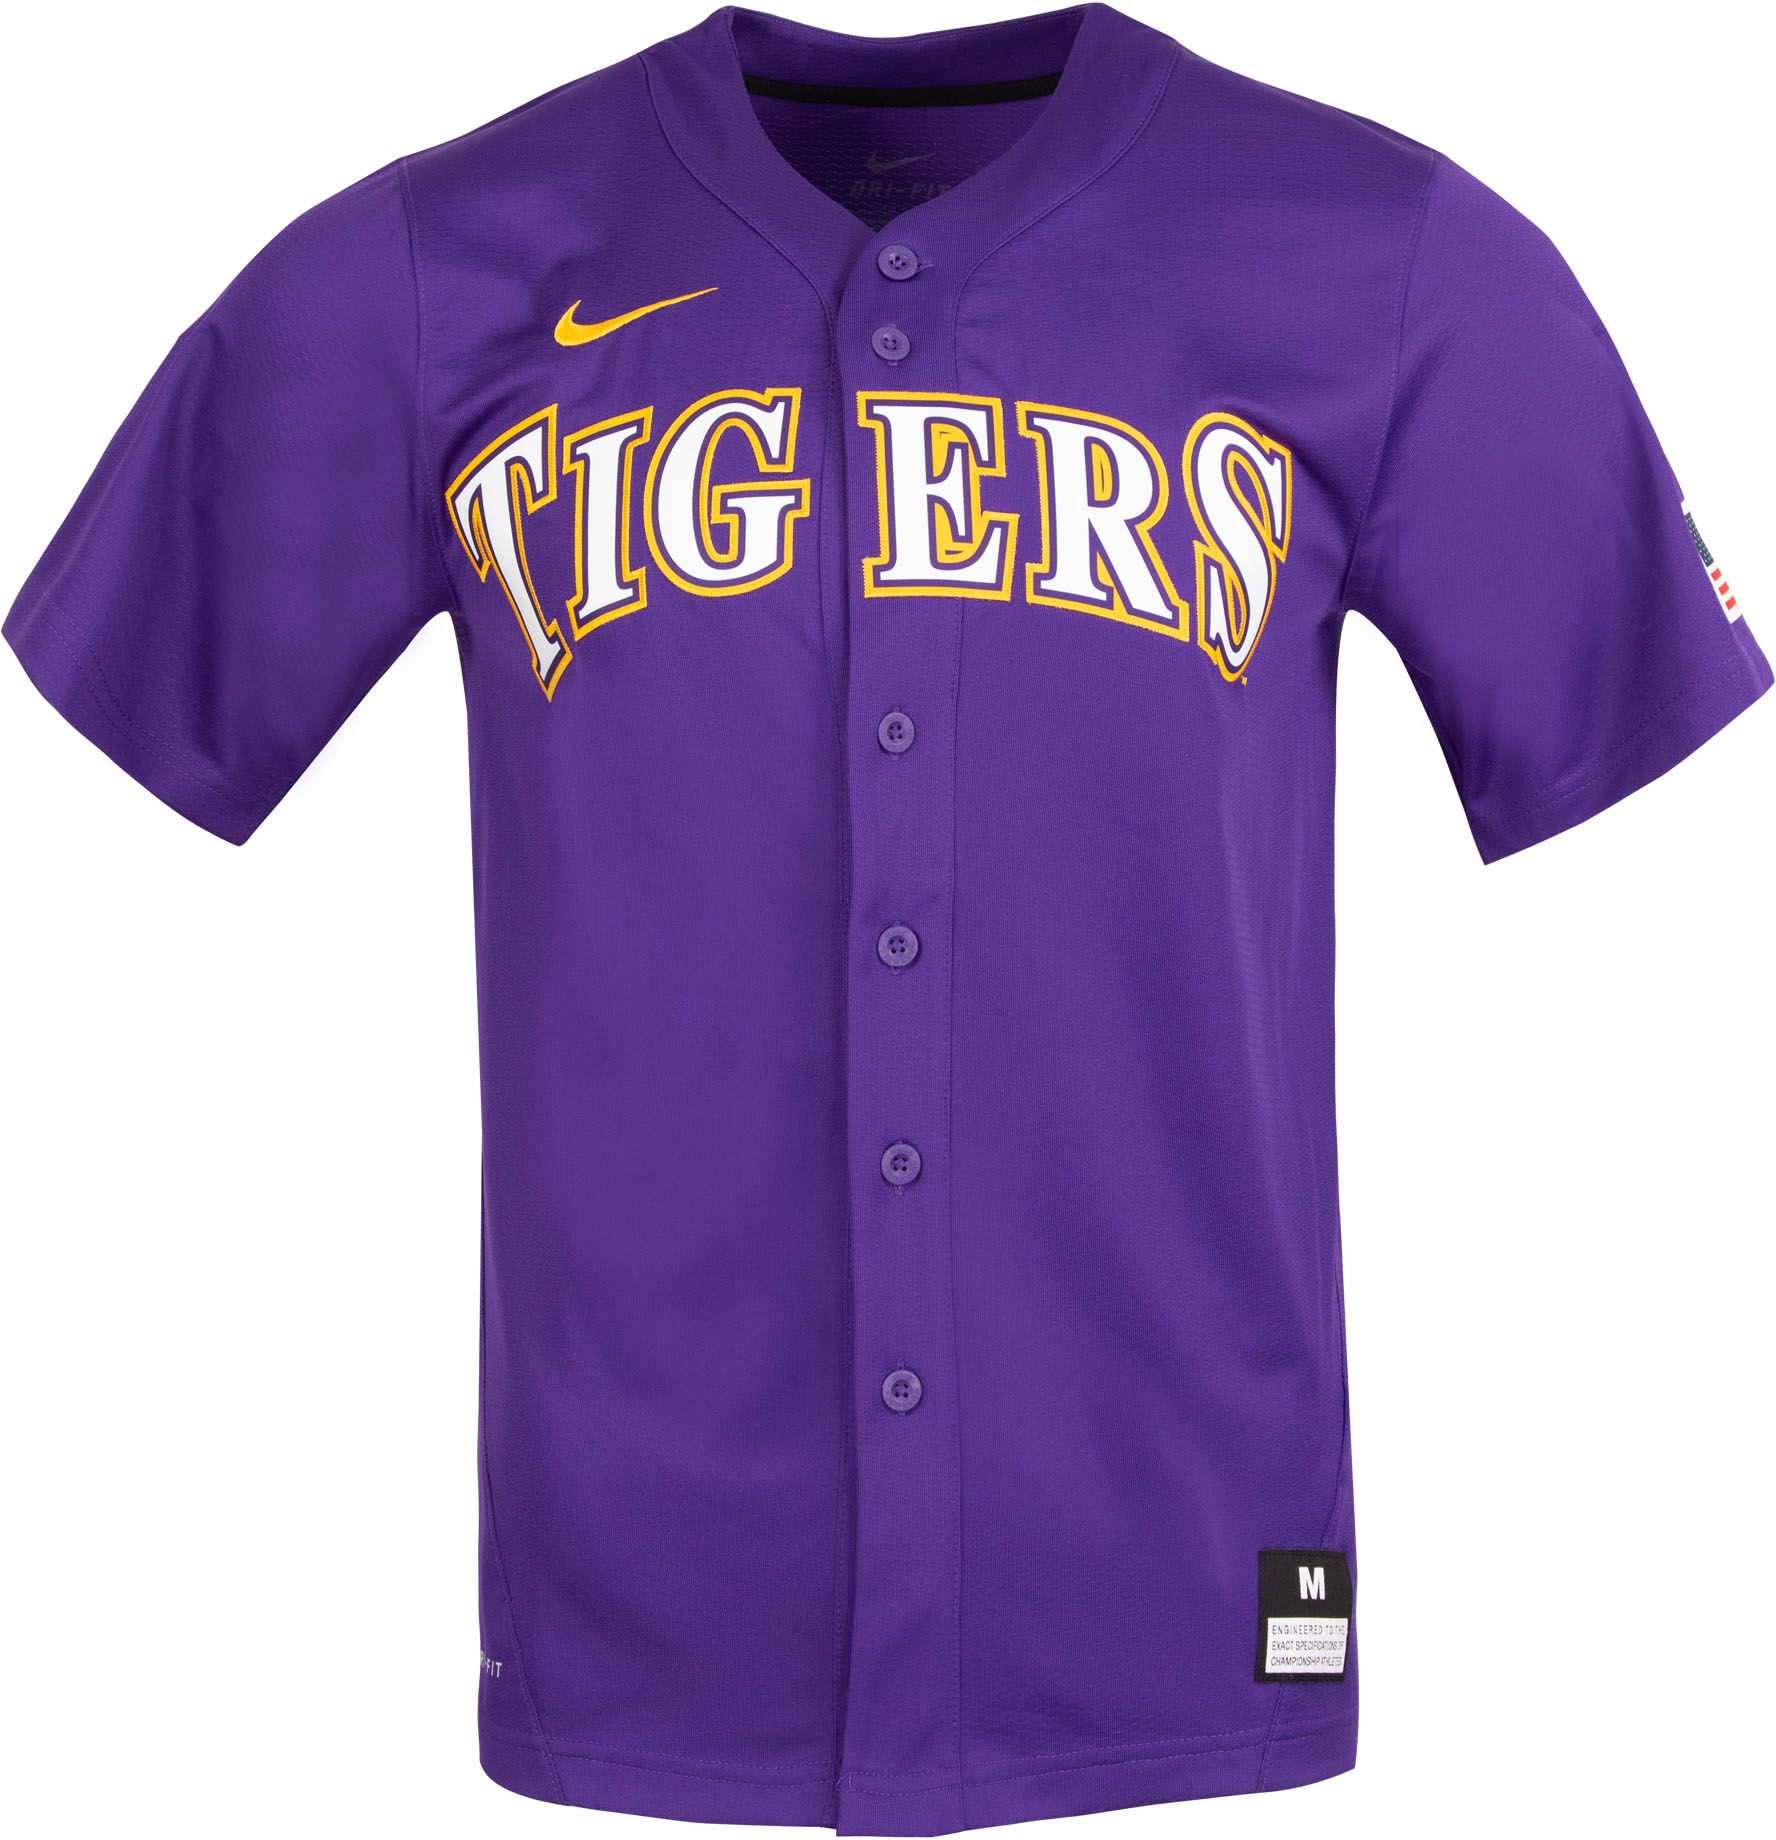 Men's Nike Purple LSU Tigers Replica Basketball Jersey